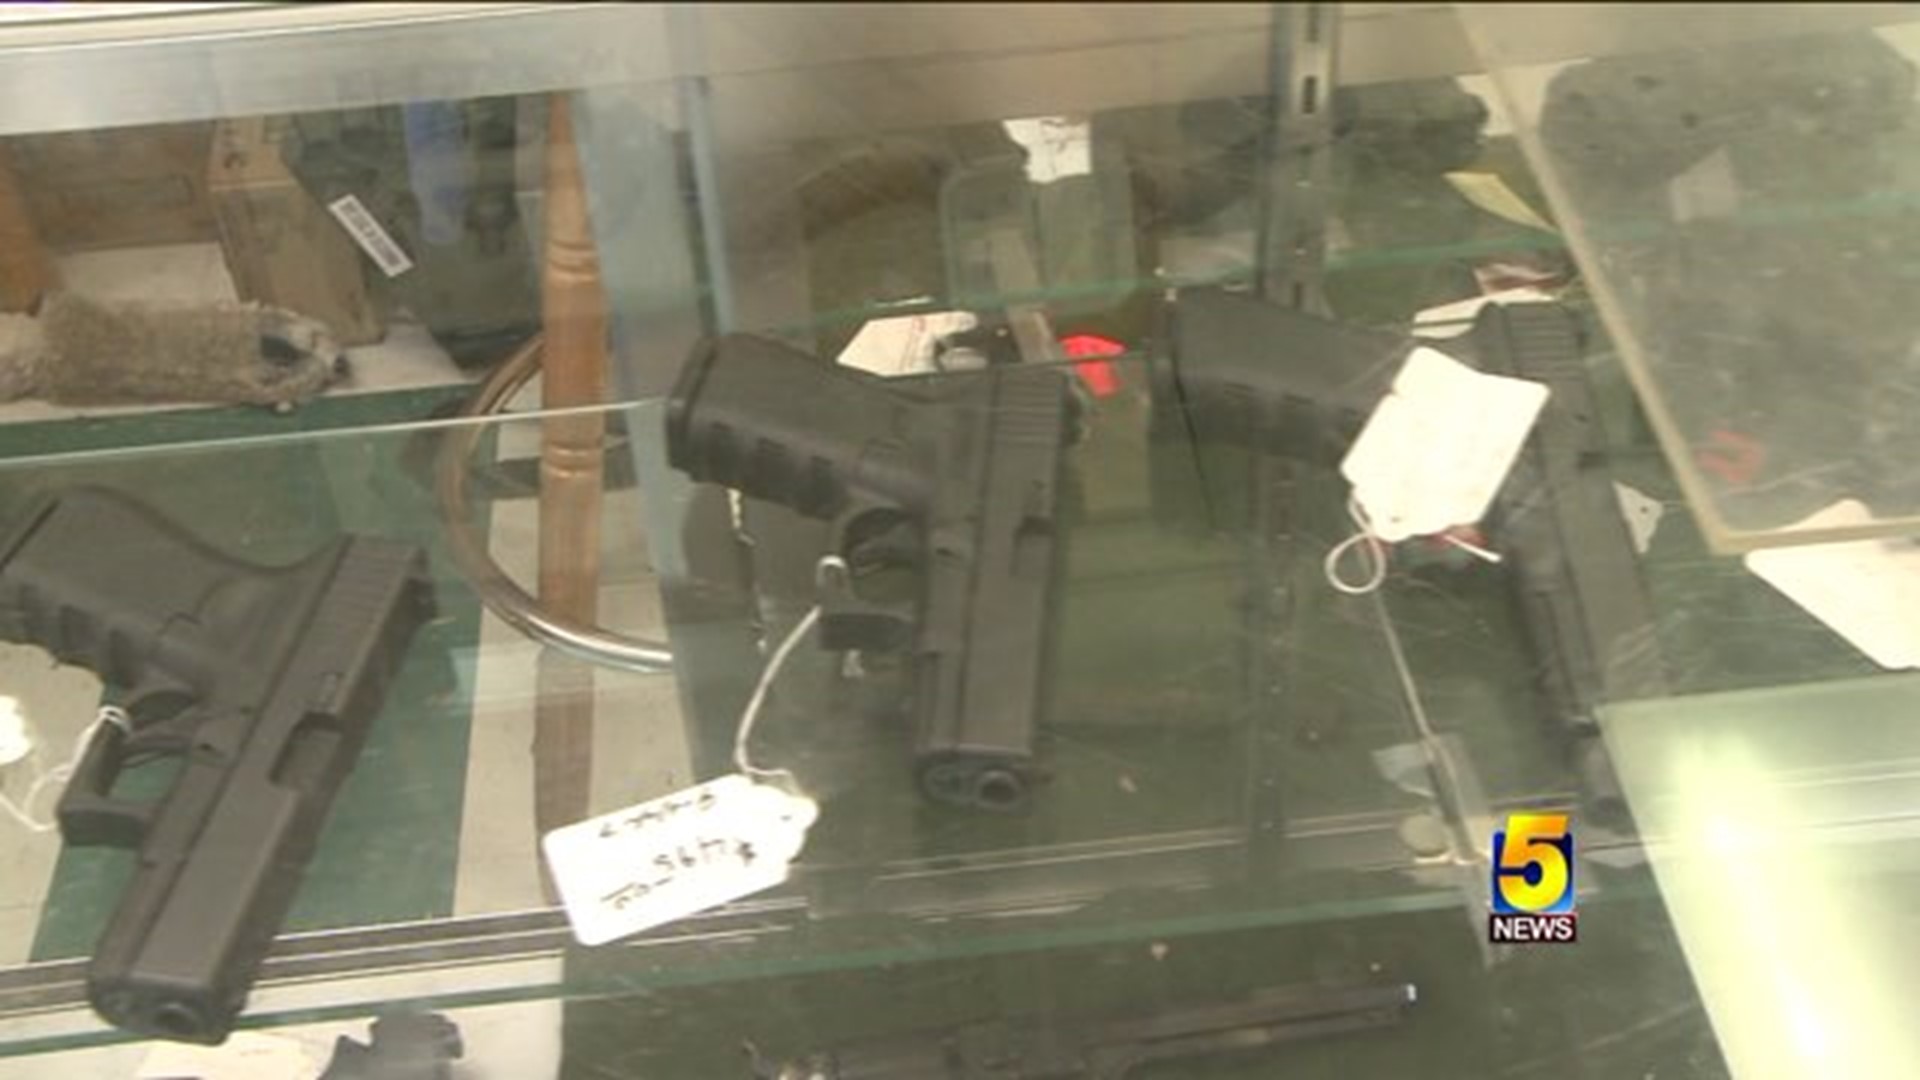 Firearms On Campus Bill Dies In Committee